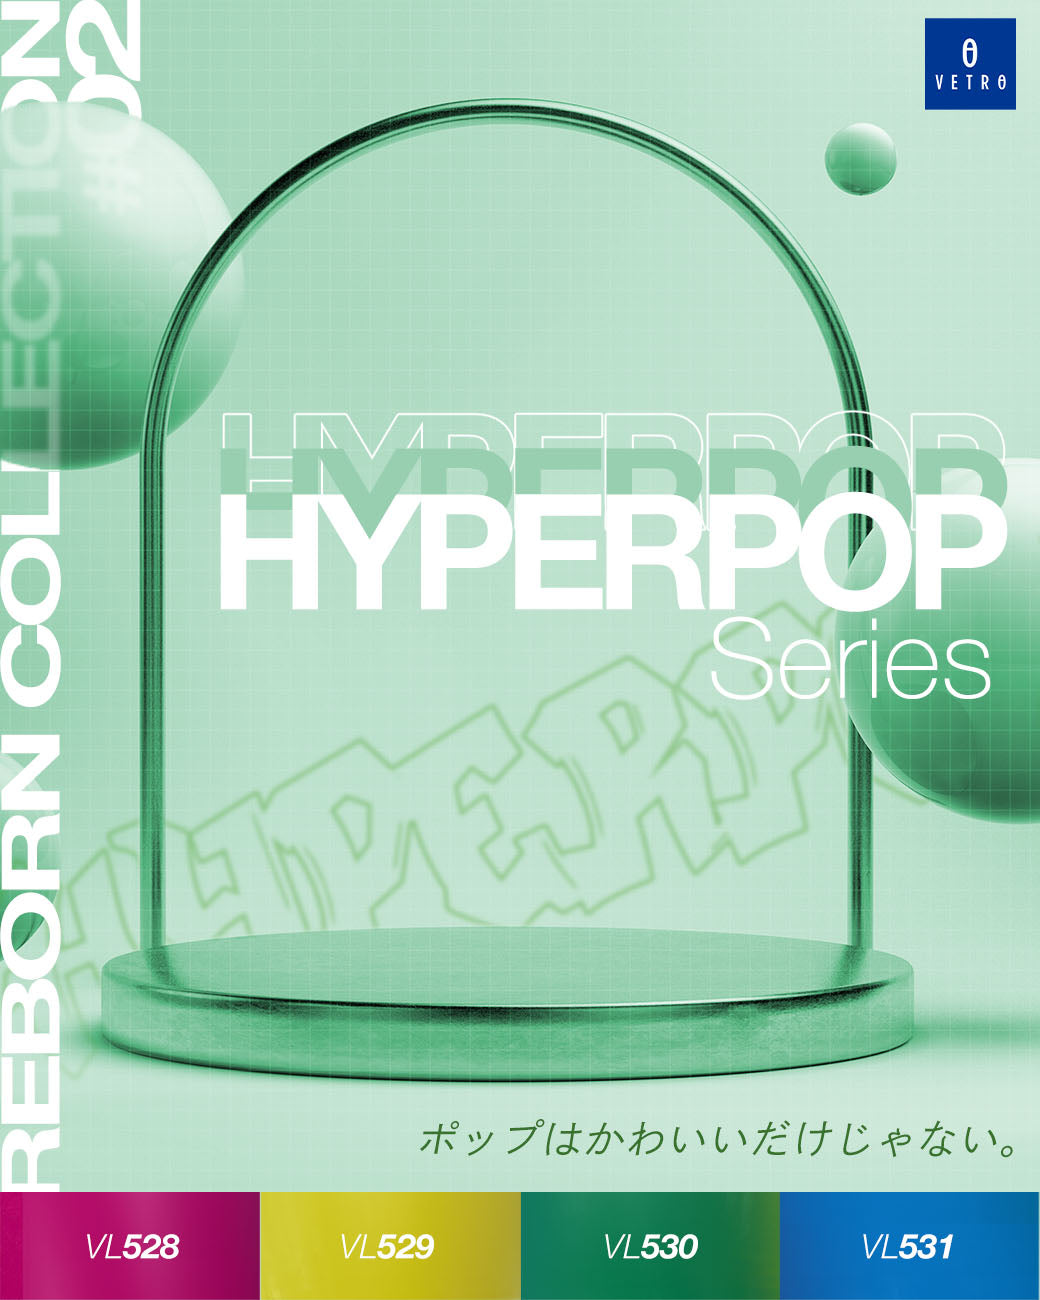 VETRO No.19 - HYPERPOP Series